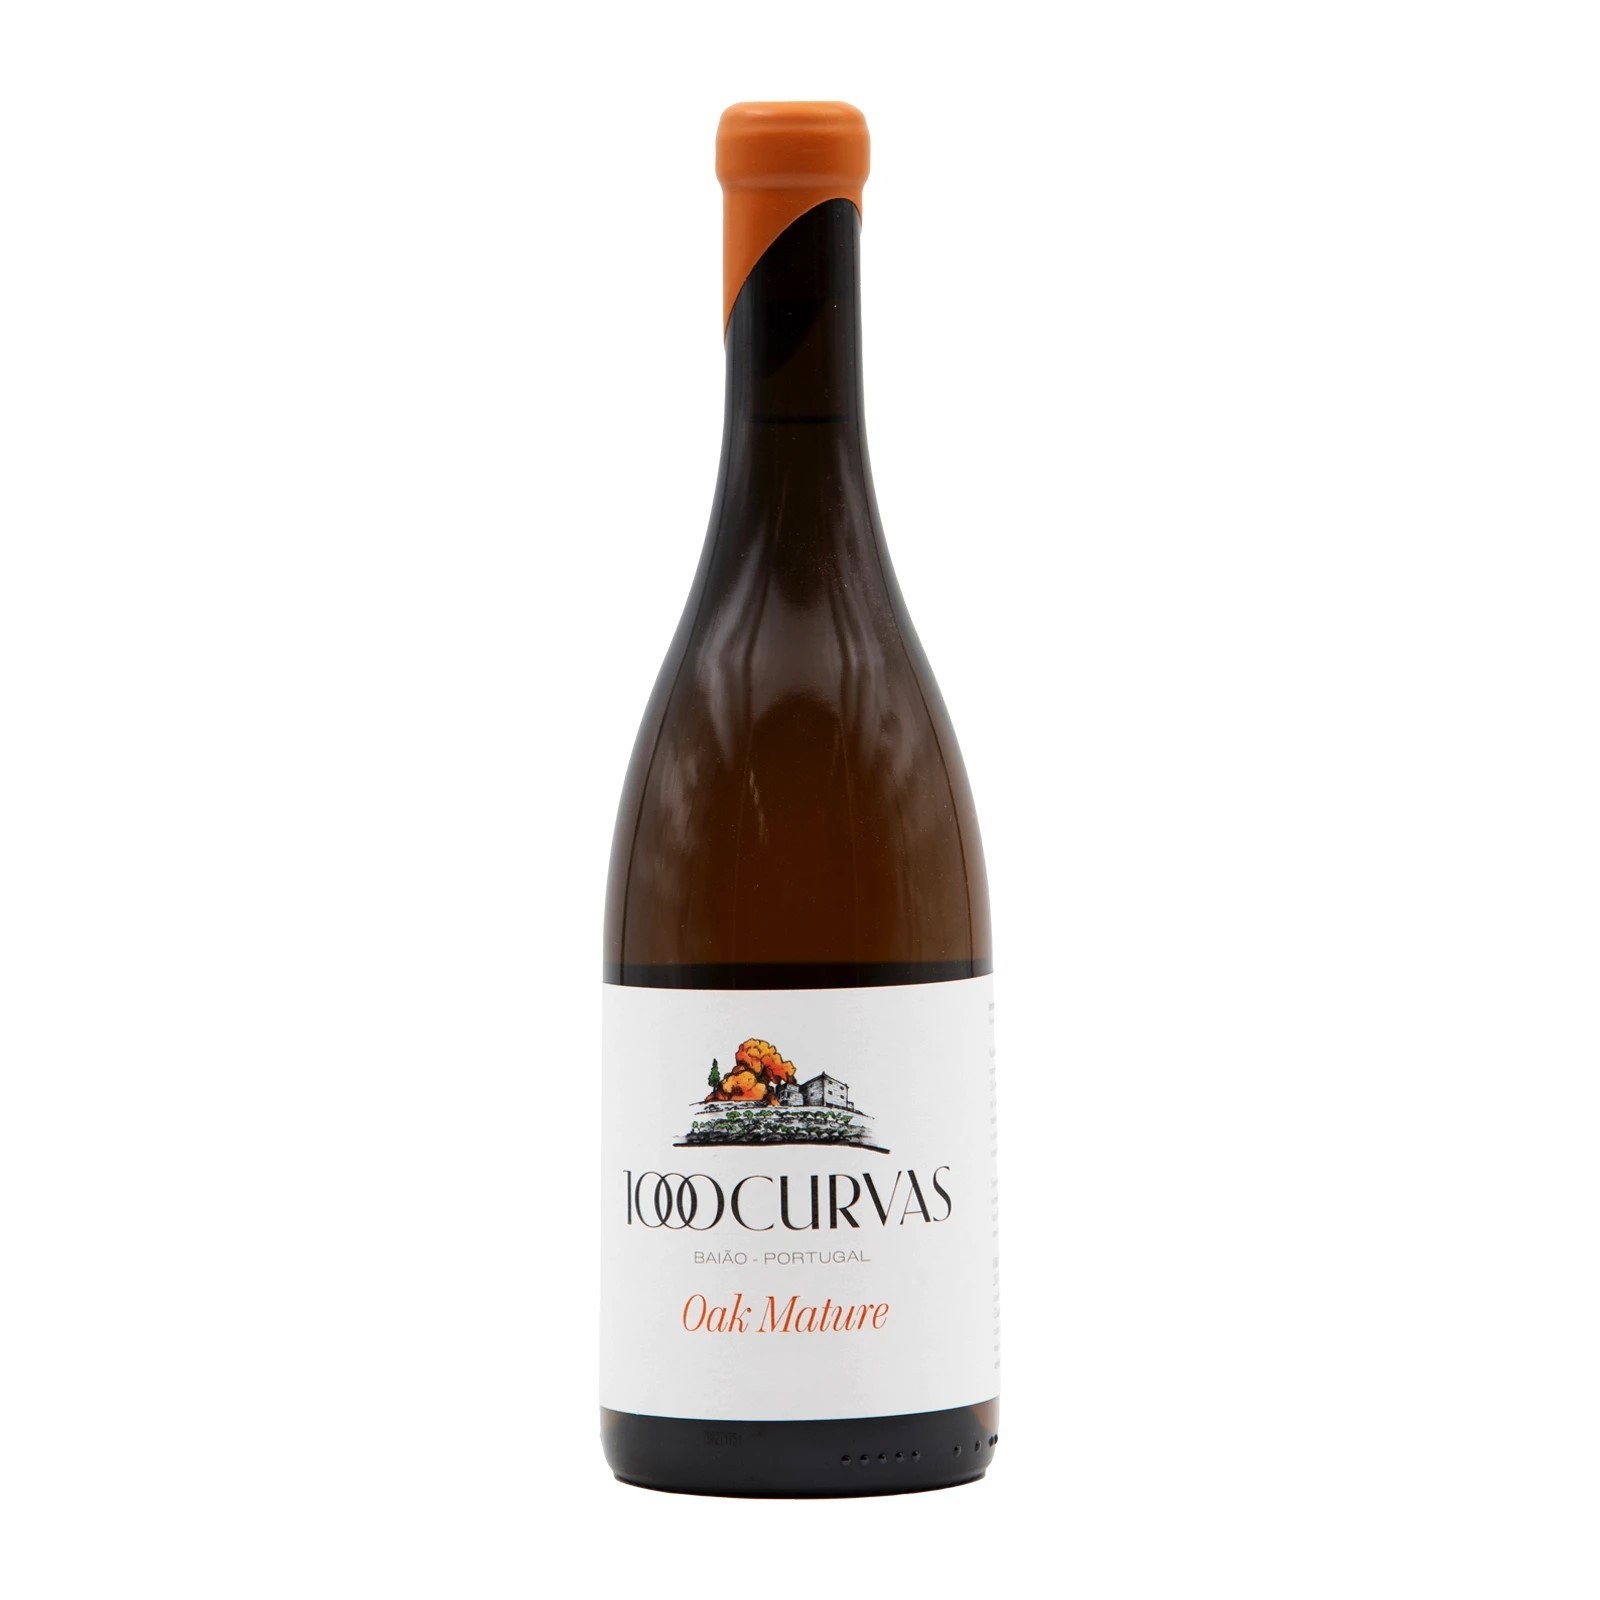 1000 Curvas Chardonnay Alvarinho Oak Mature Branco 2019